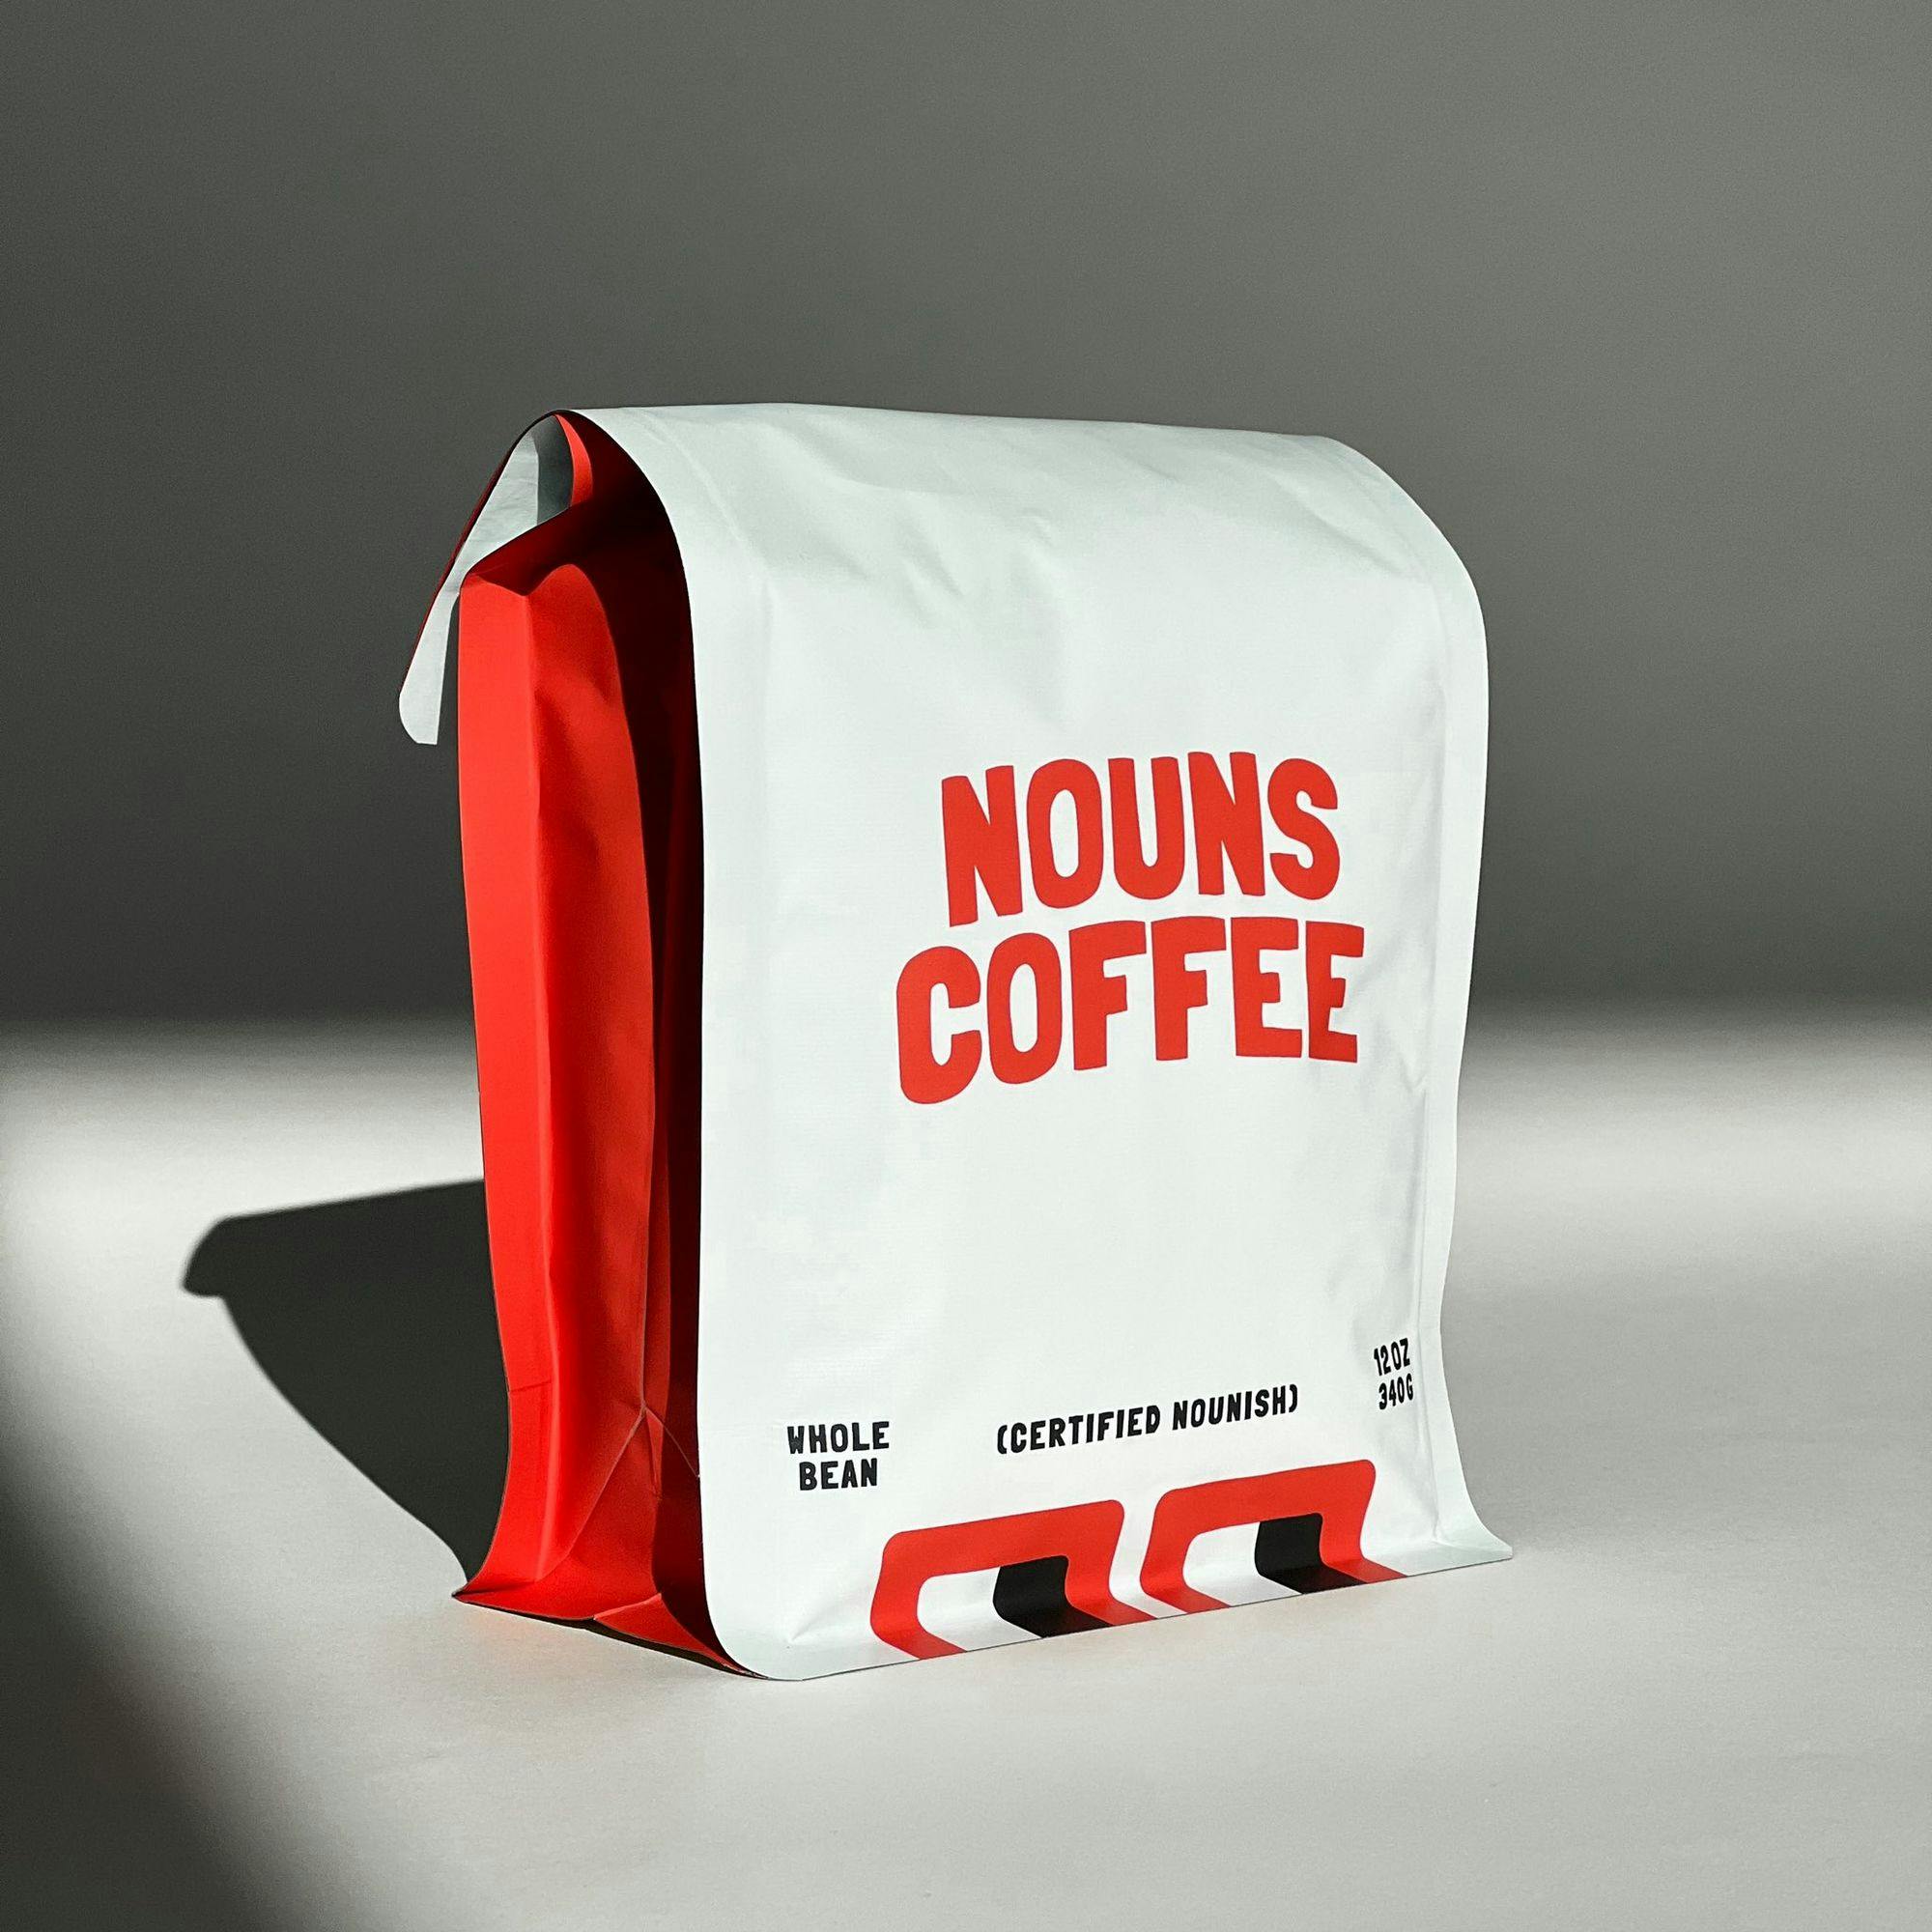 Nouns Coffee.jpg